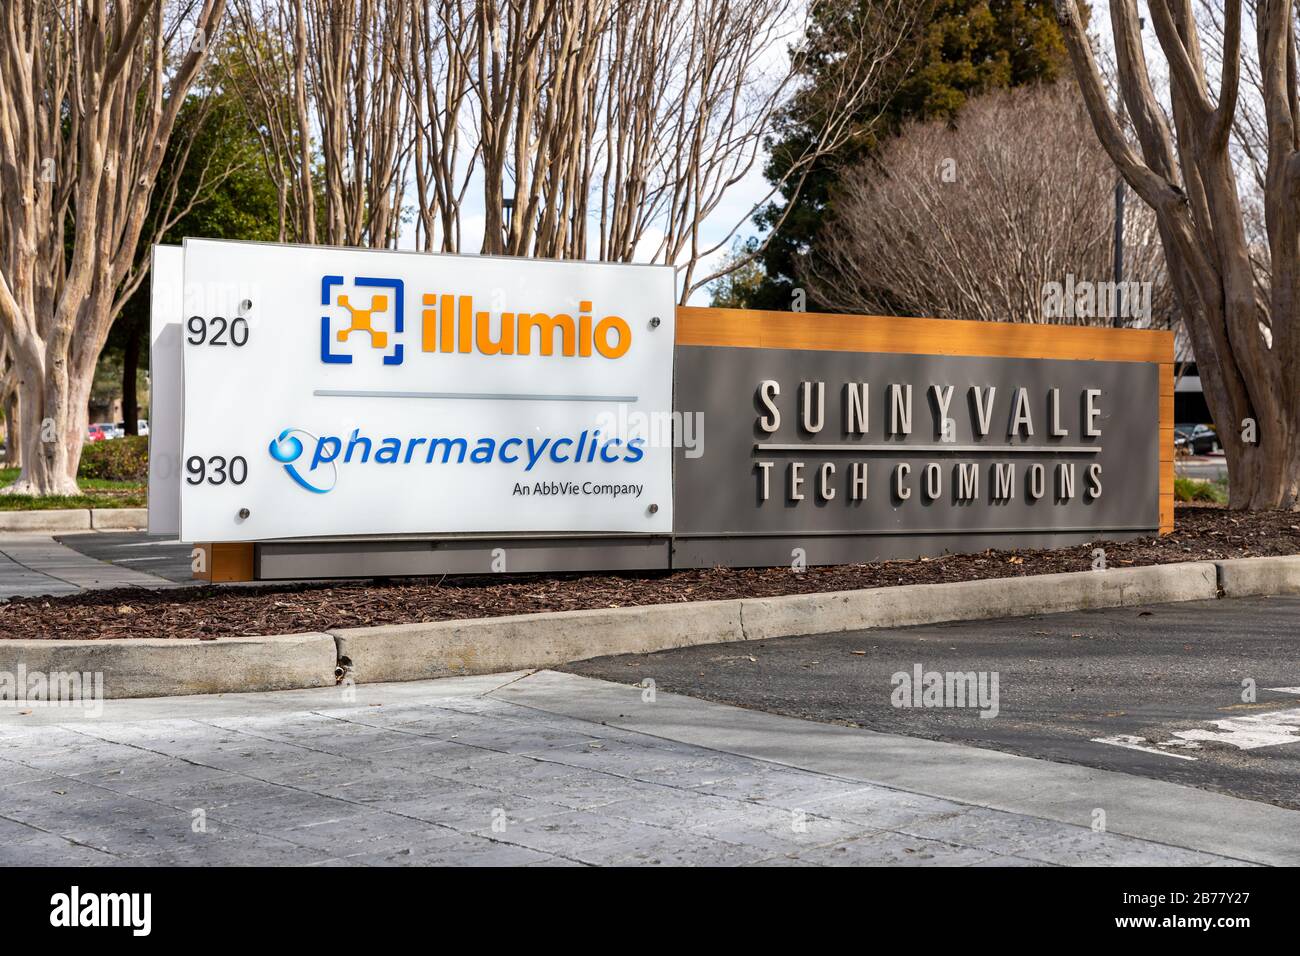 Illumio and Pharmacyclics, Sunnyvale Tech Commons, sign, Deguigne Dr, Sunnyvale, California, USA Stock Photo